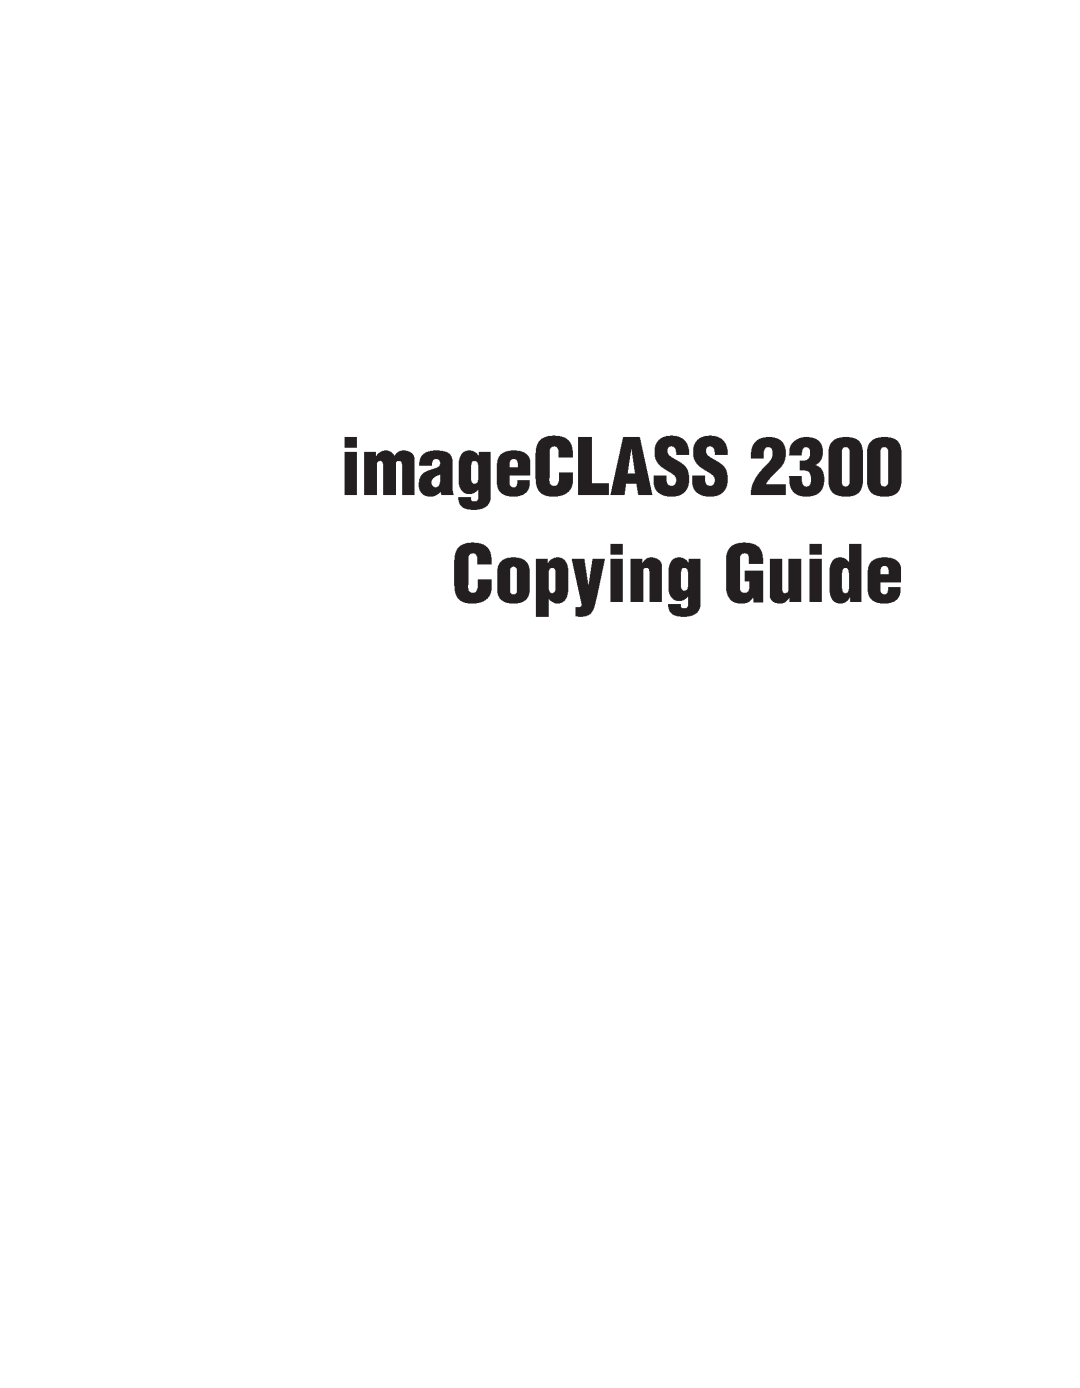 Canon manual imageCLASS 2300 Copying Guide 